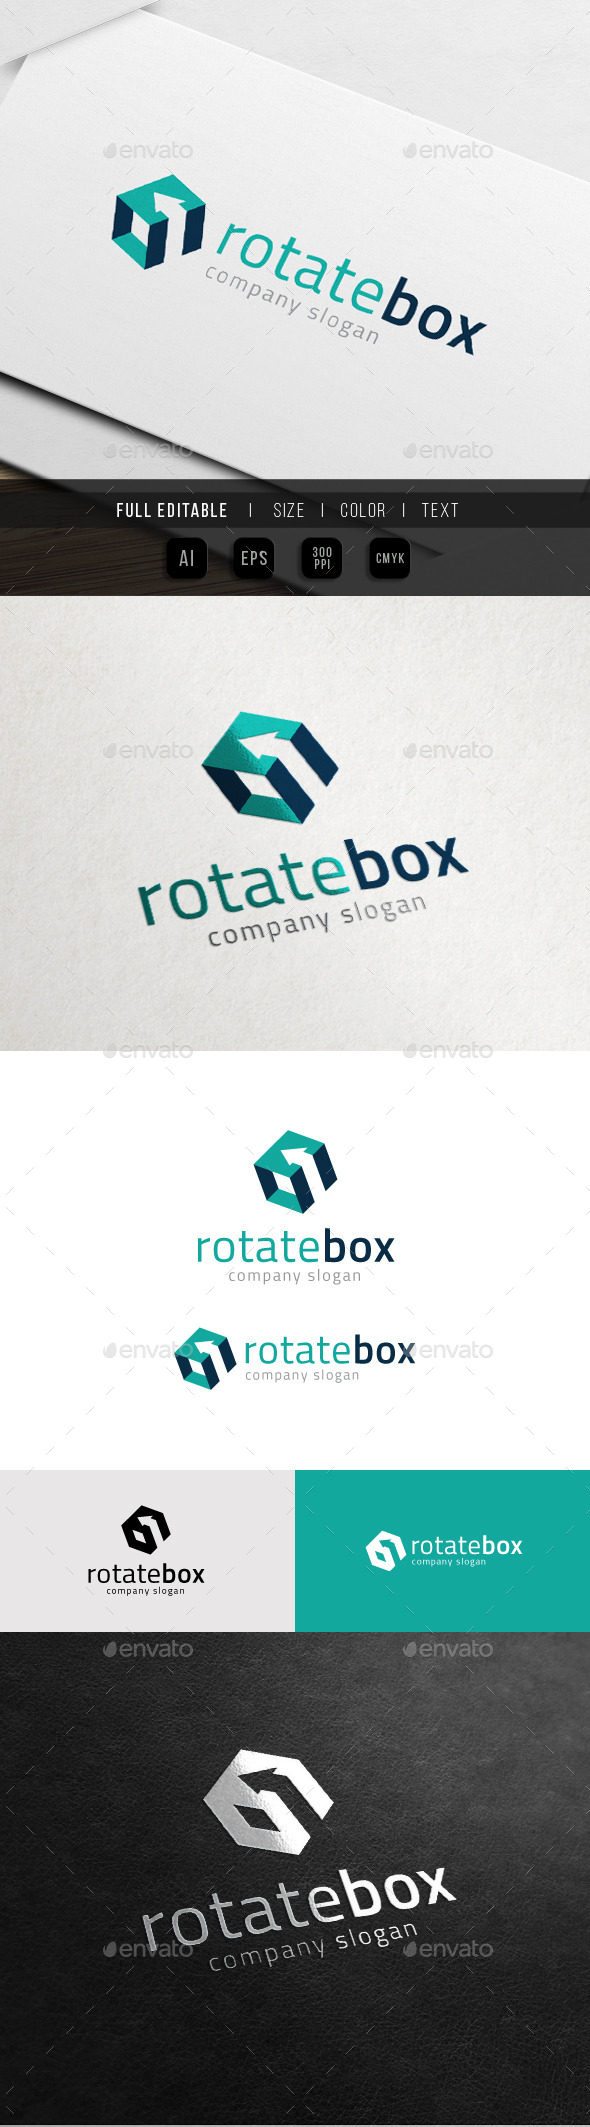 Fast Rotate Studio - Box Marketing Agency Logo